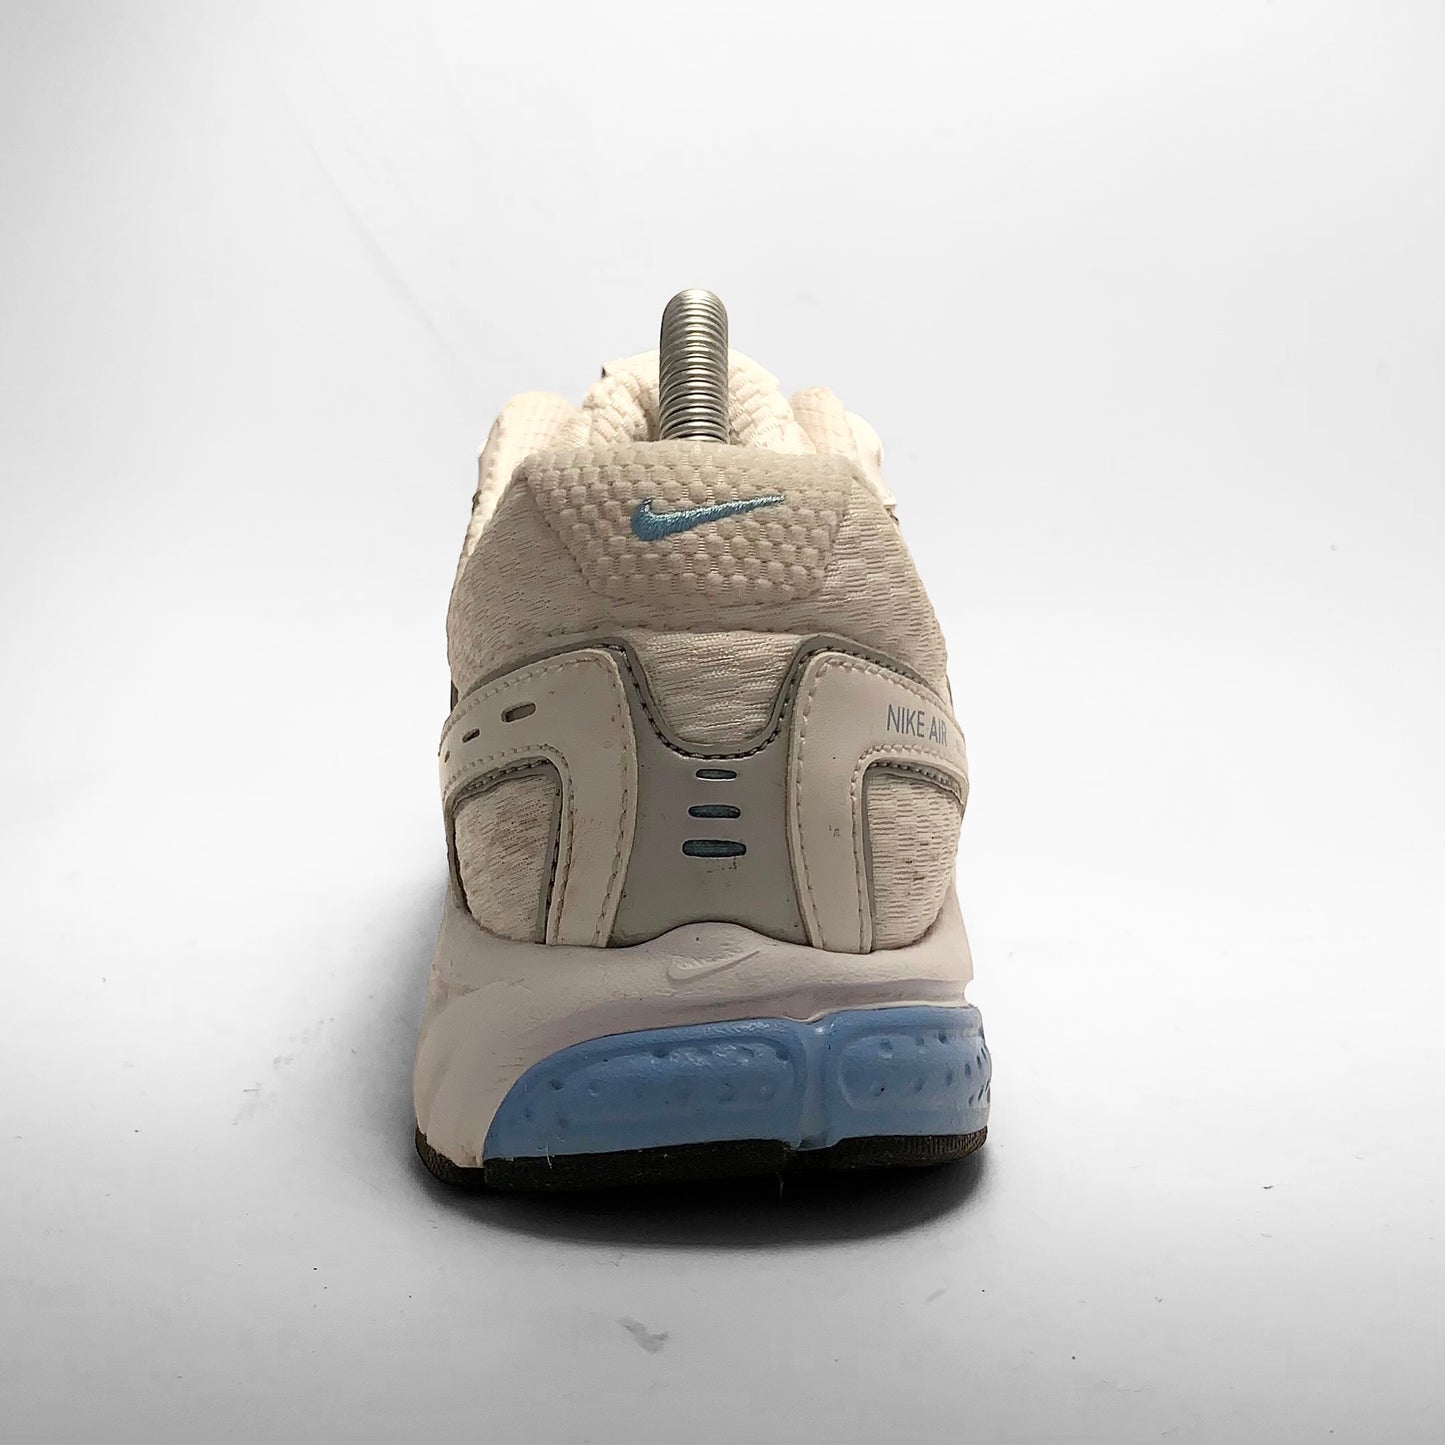 Nike Vapor Quick (2010)